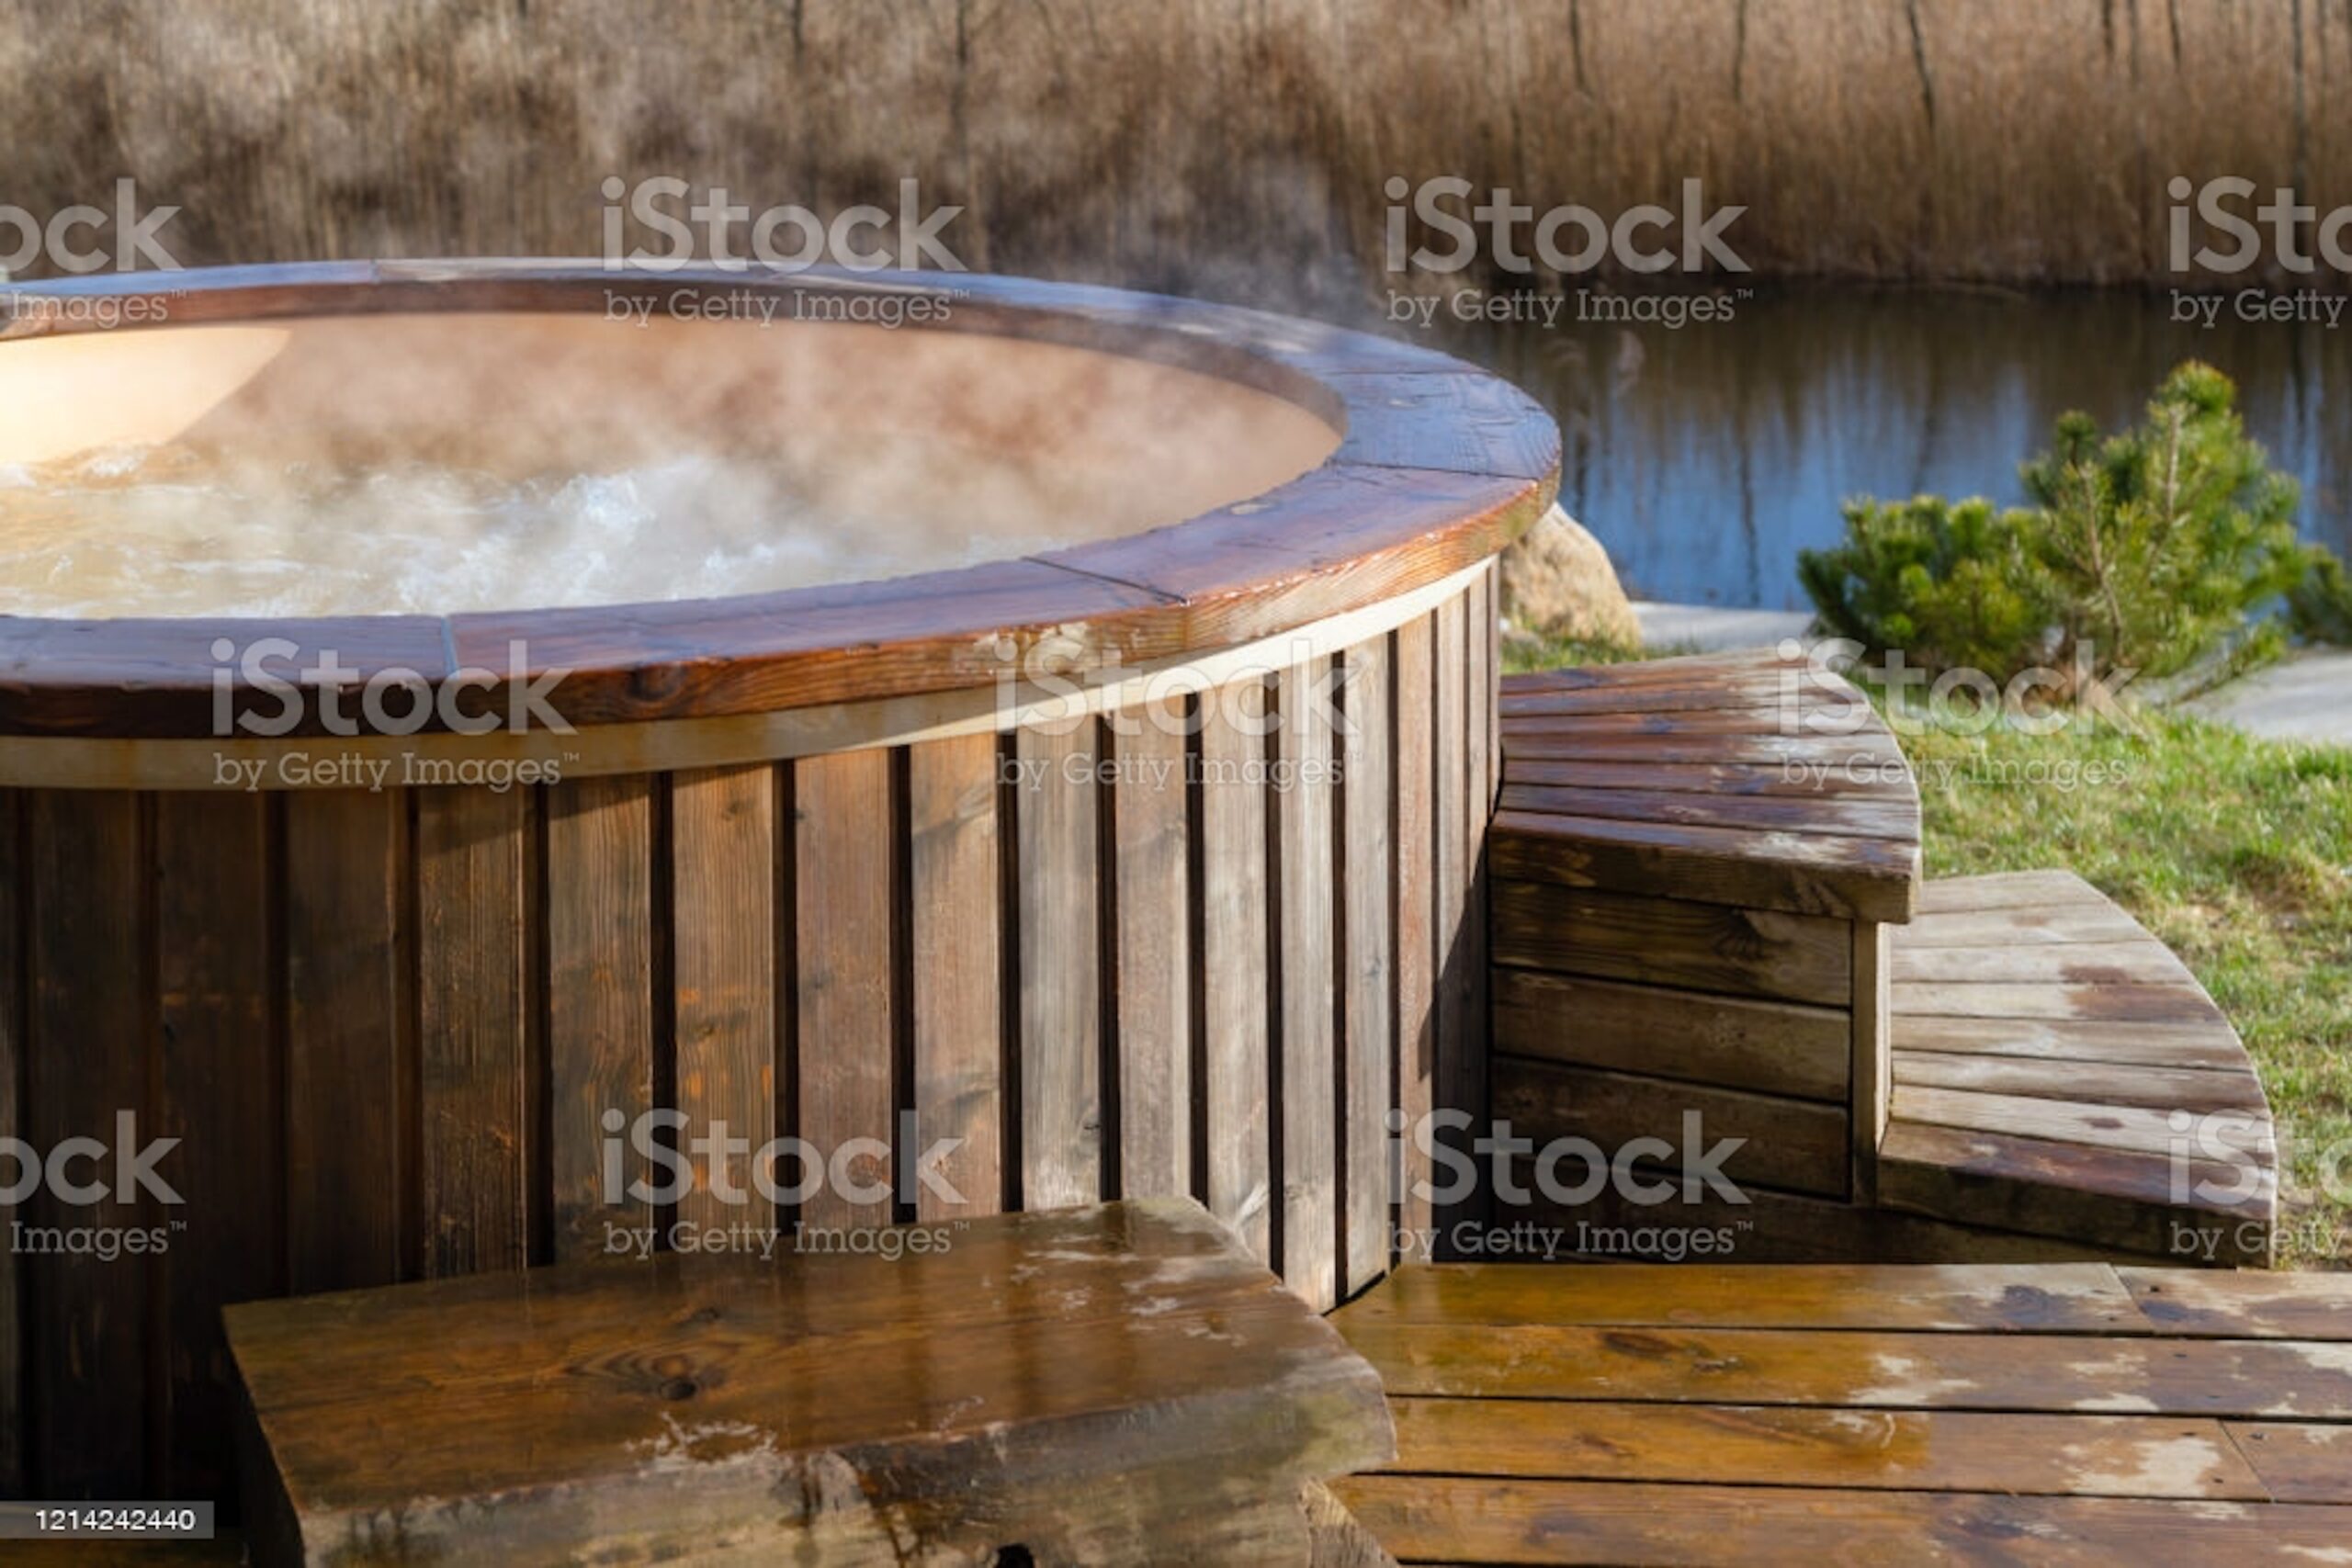 piscine in legno